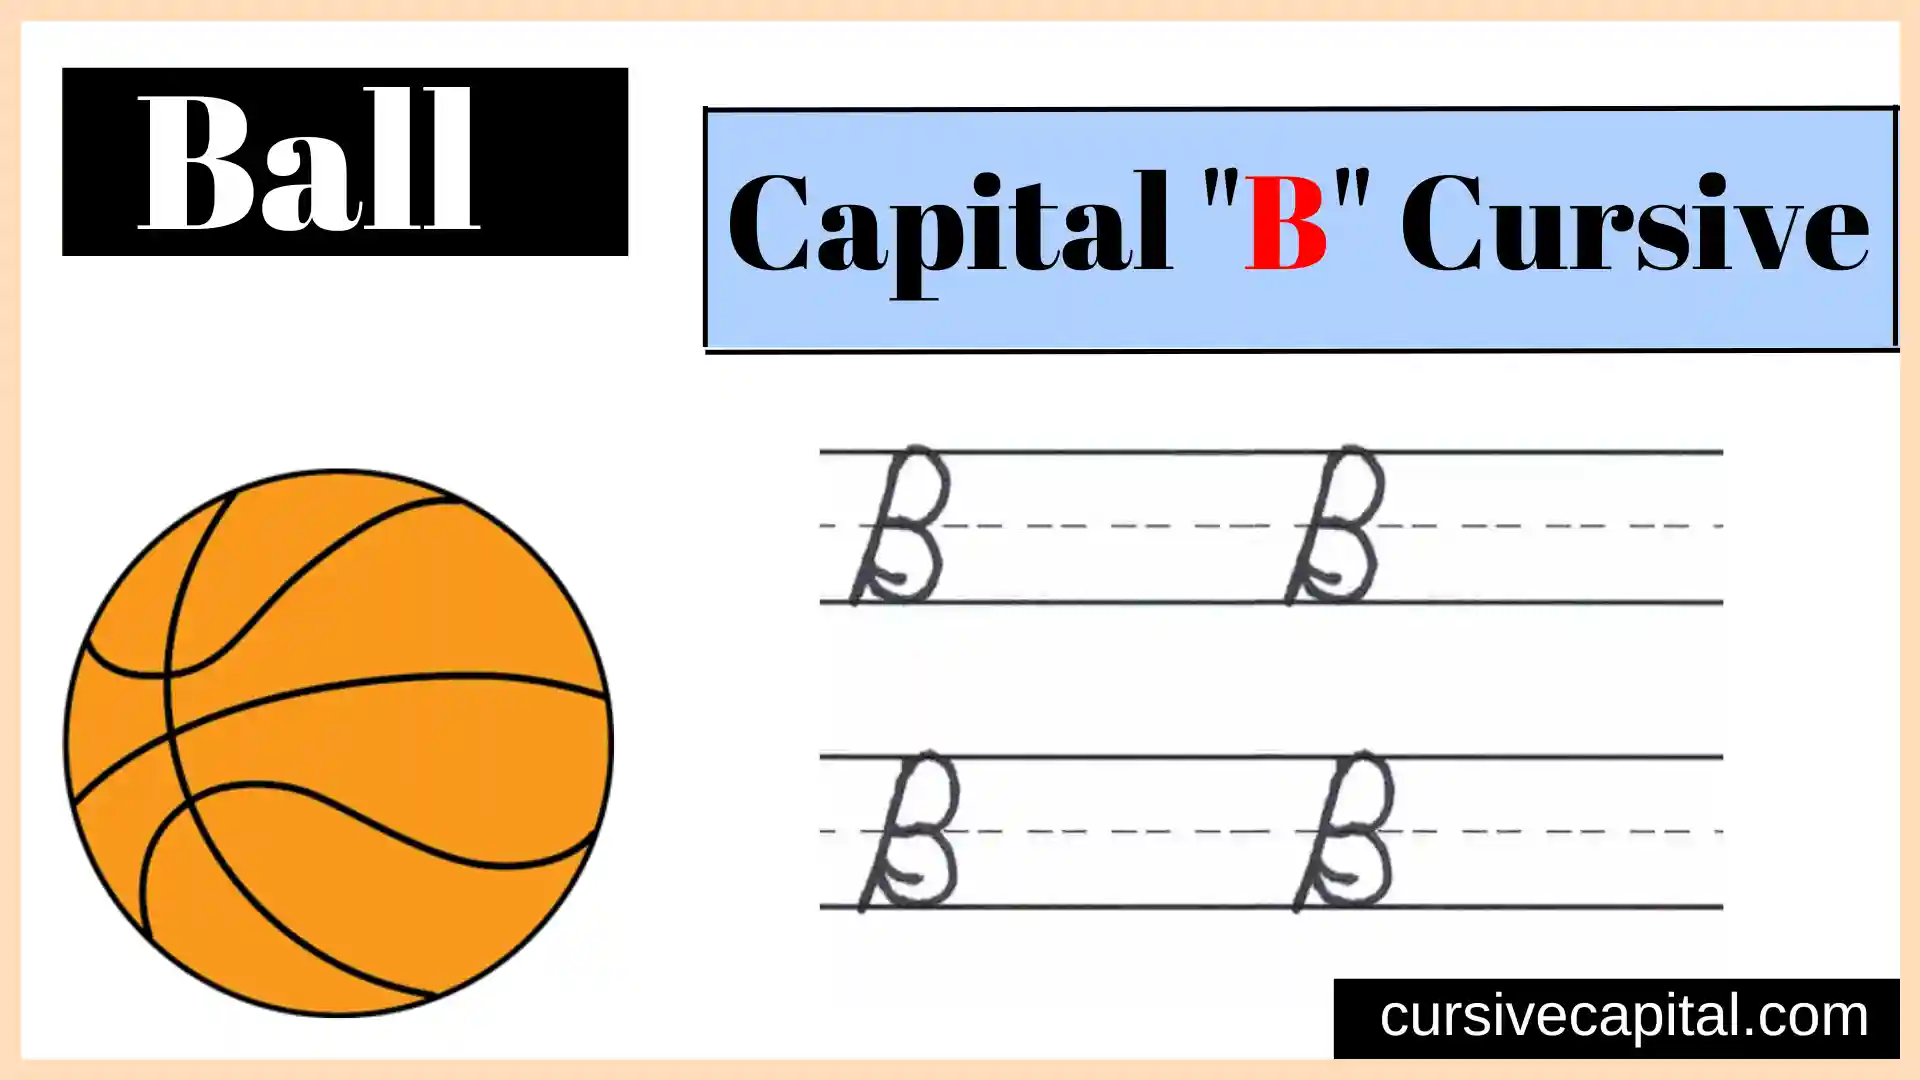 Capital B cursive